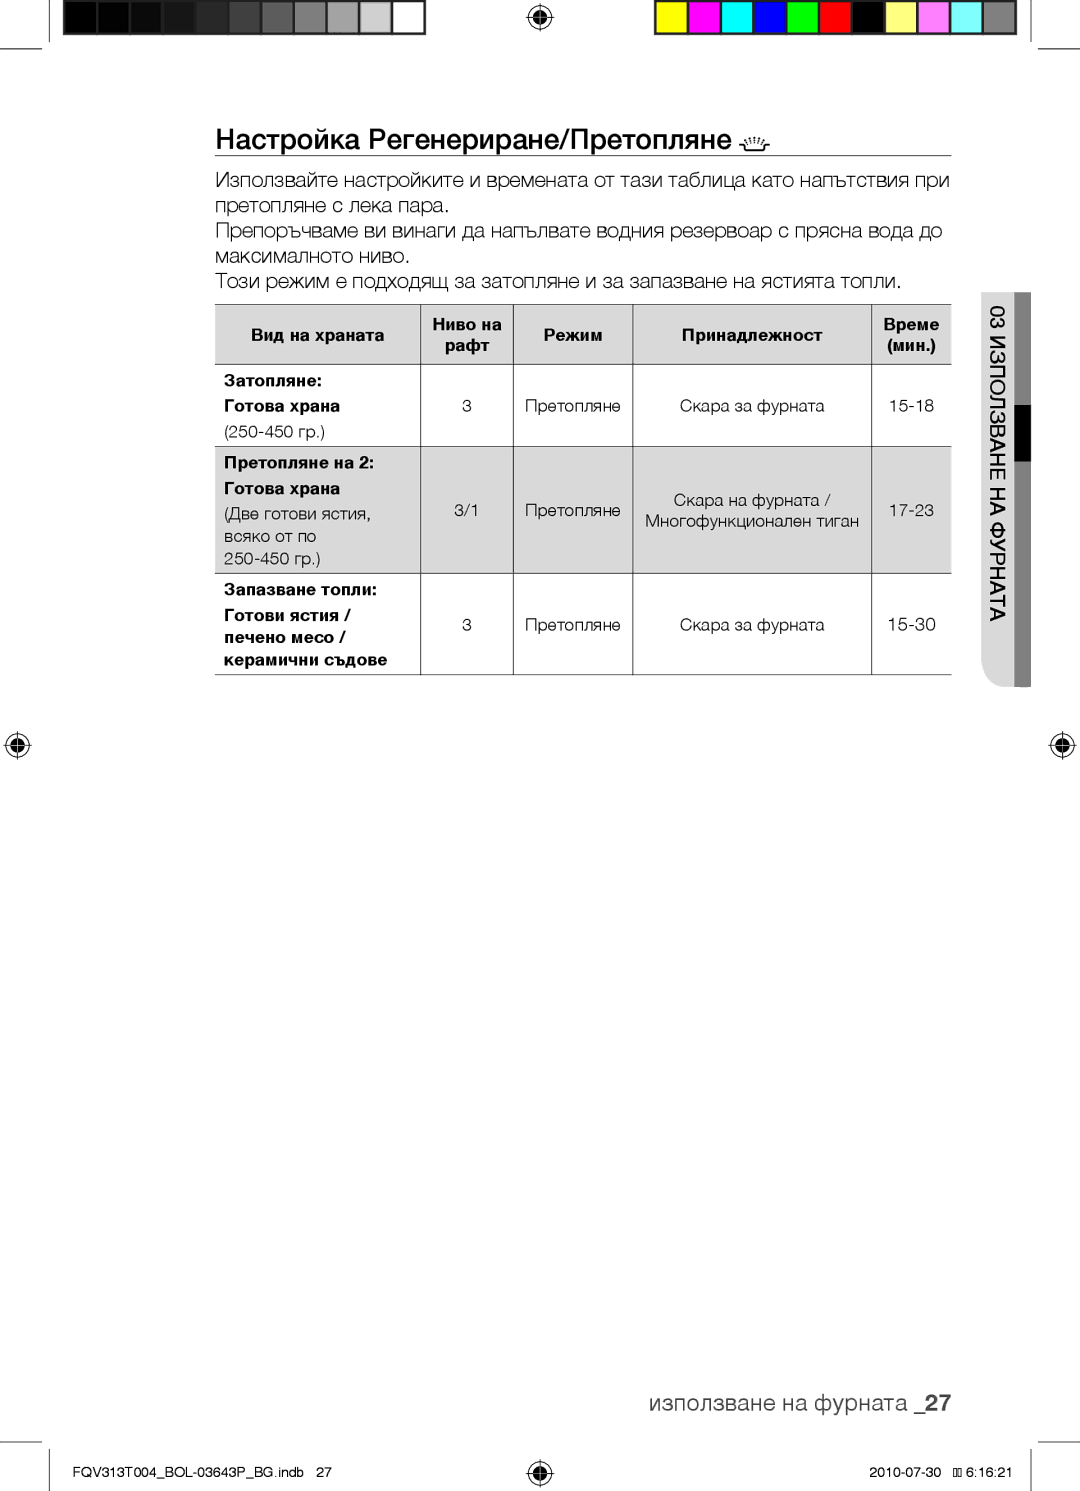 Samsung FQV313T004/BOL manual Настройка Регенериране/Претопляне 